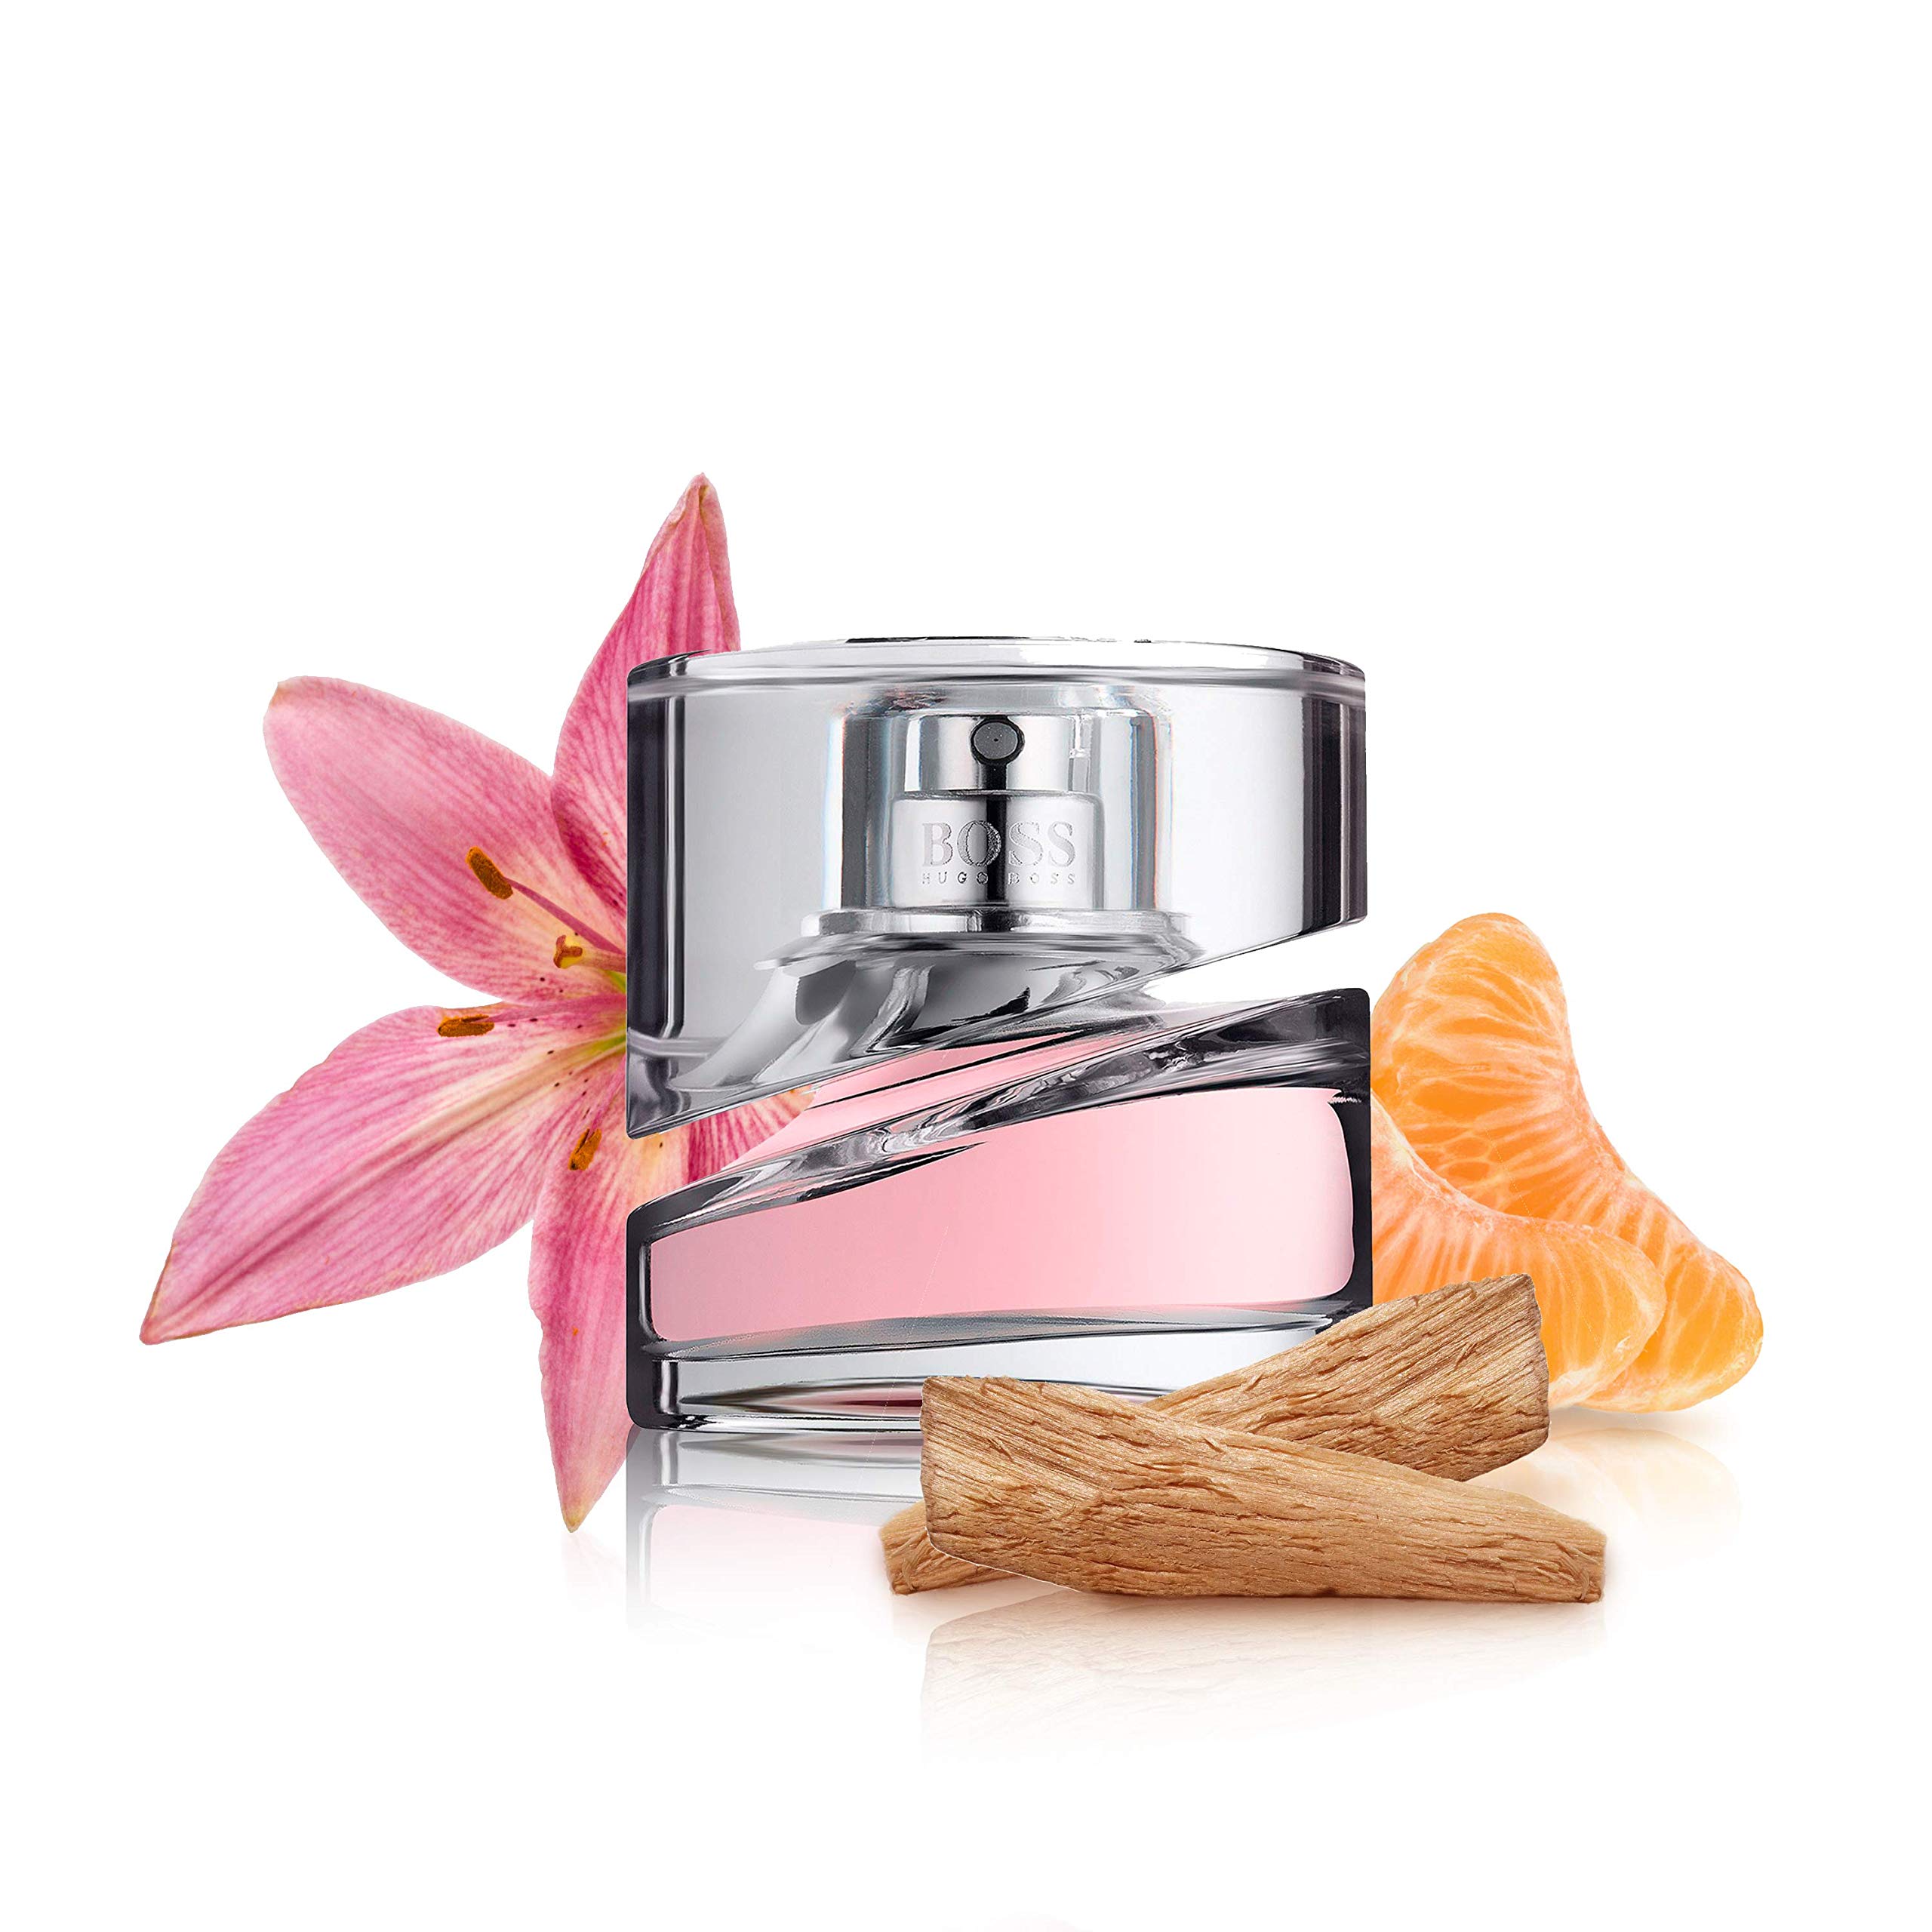 Hugo Boss Femme Eau de Parfum for Women - Notes of Tangerine and Blackcurrant